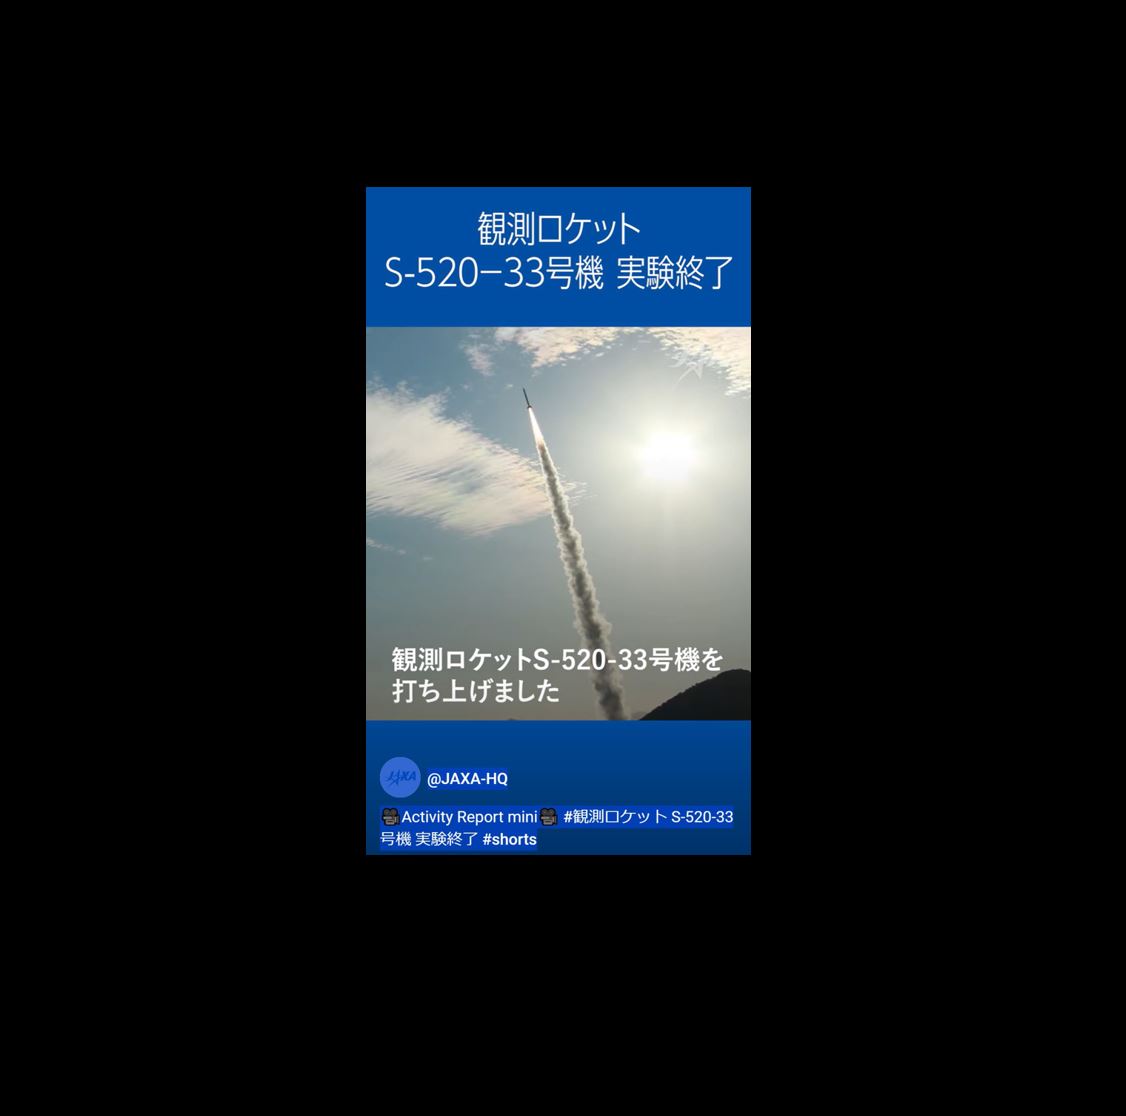 【JAXA Activity Report mini】に「S-520-33号機実験終了」が掲載されました